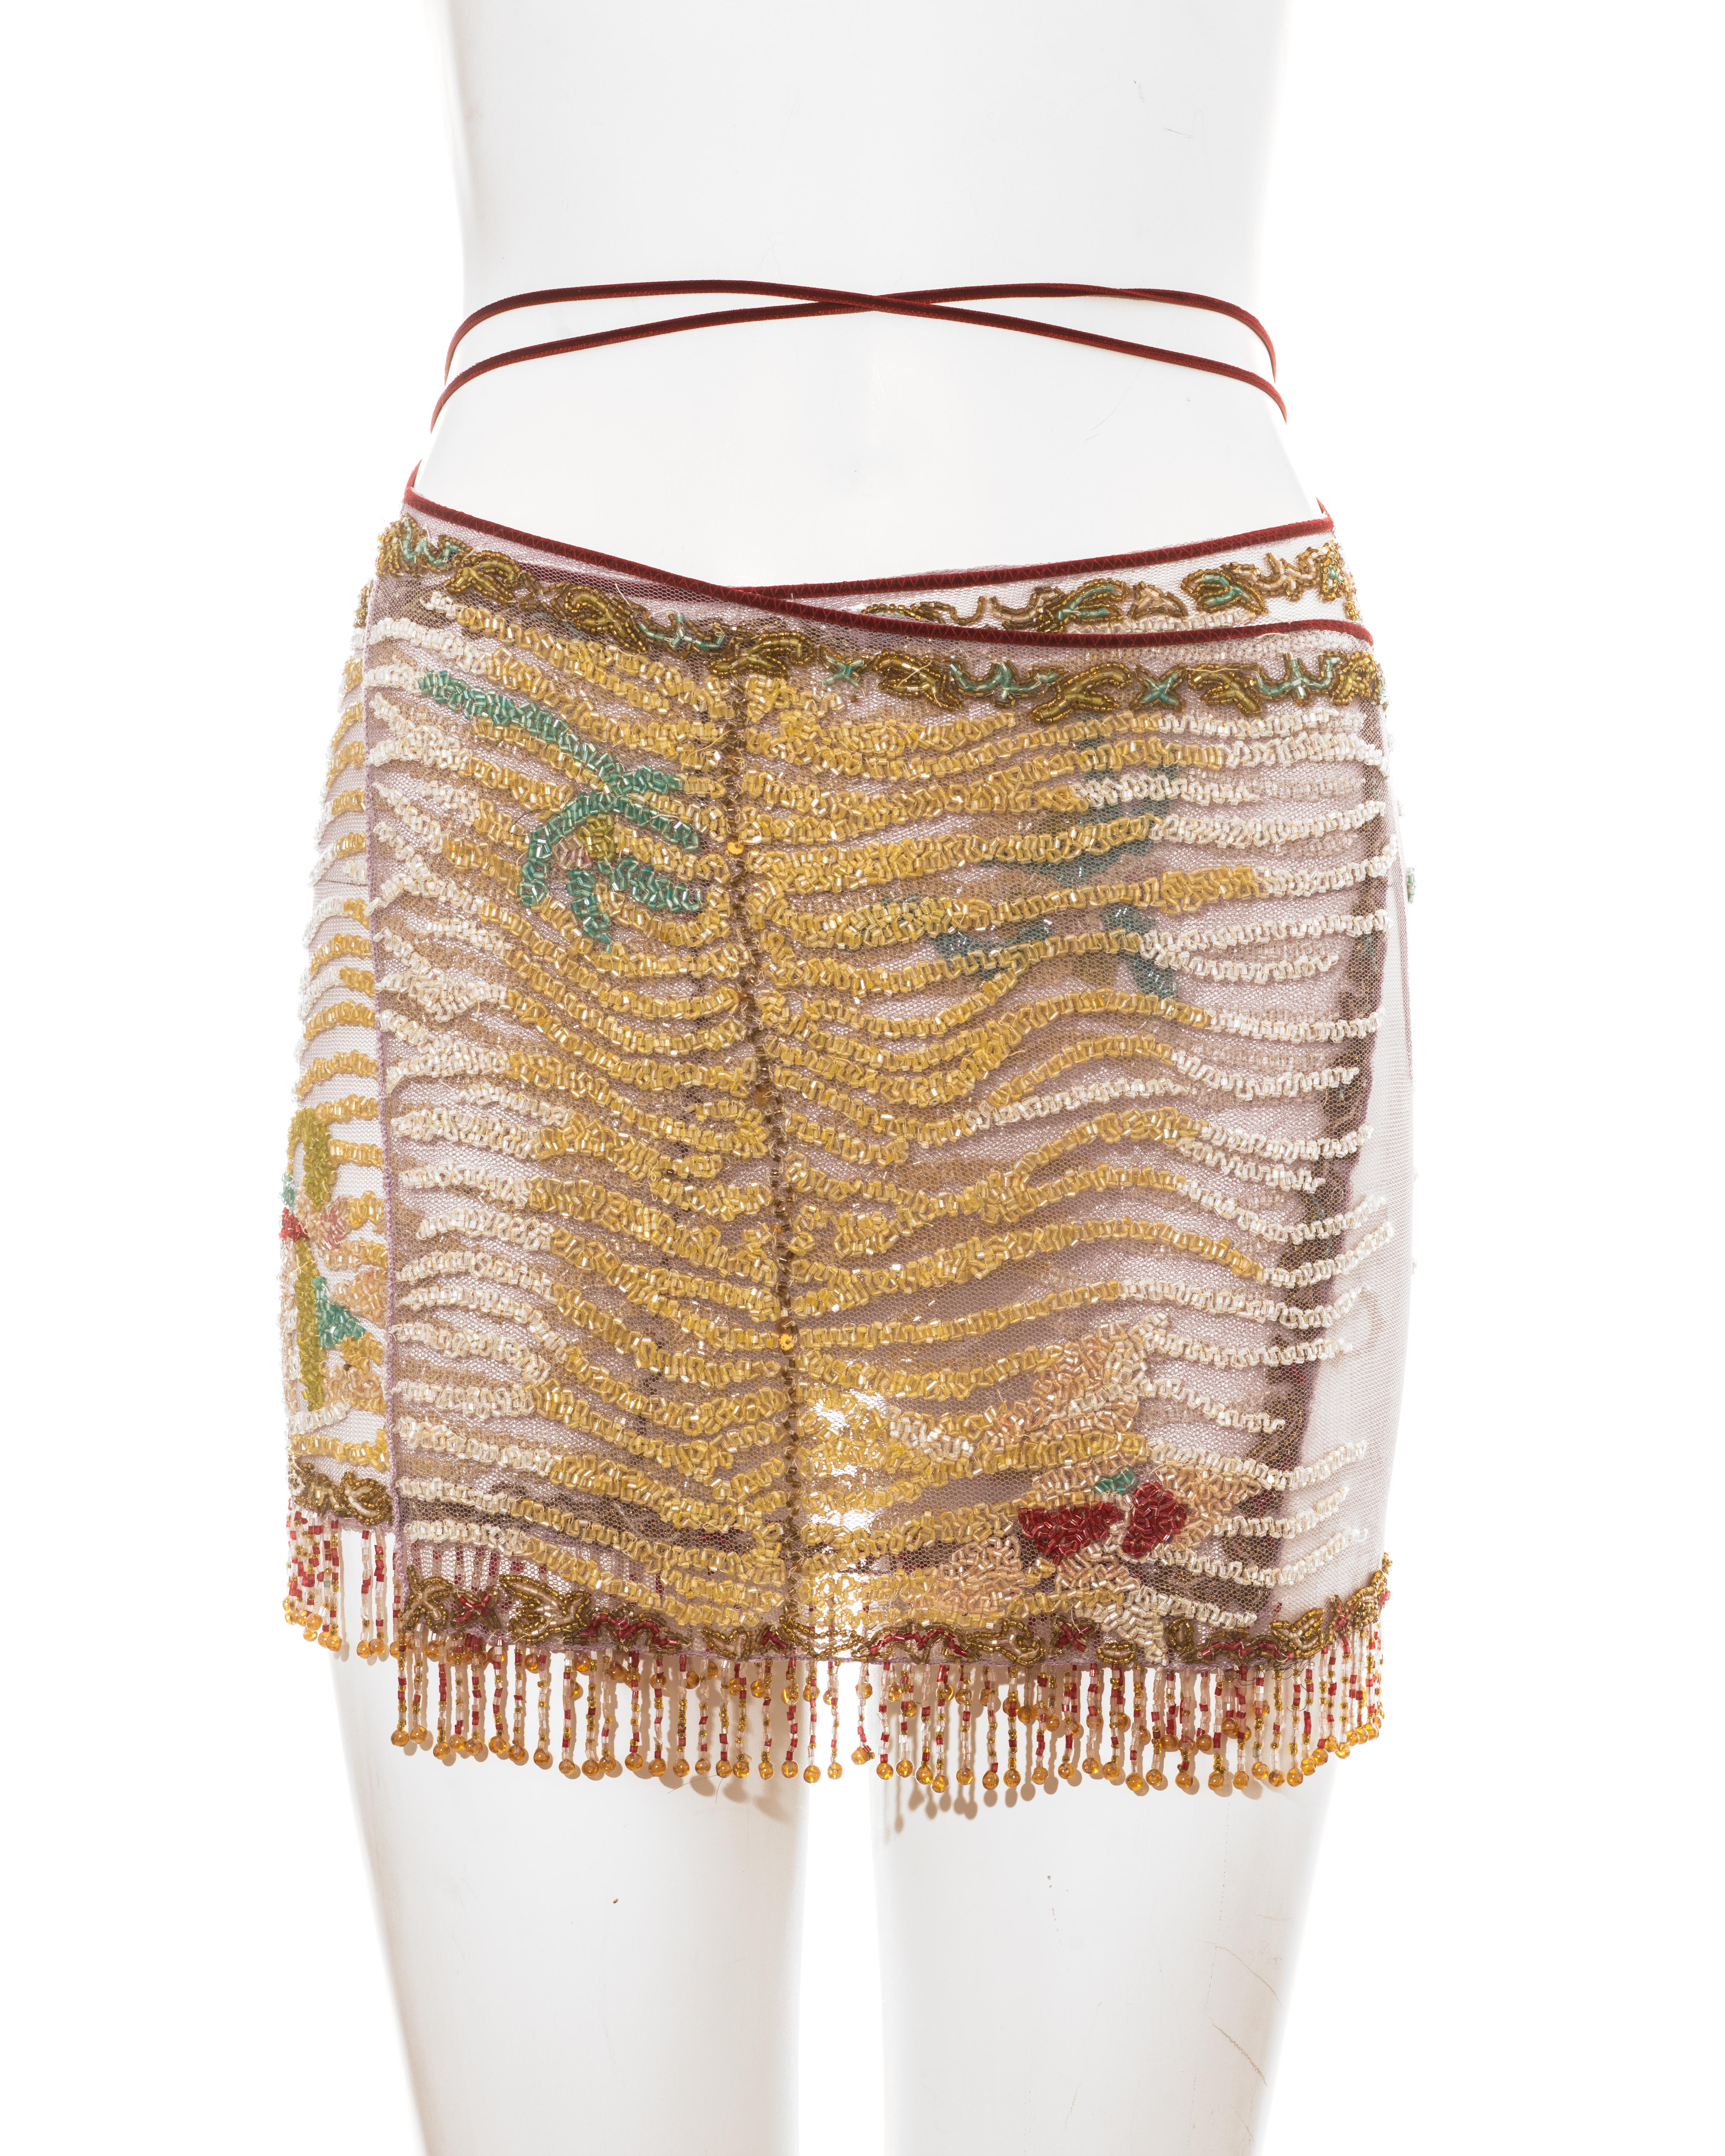 Roberto Cavalli multicoloured beaded embellished evening wrap mini skirt with red velvet string fastening and fringed trim. 

Spring-Summer 2000